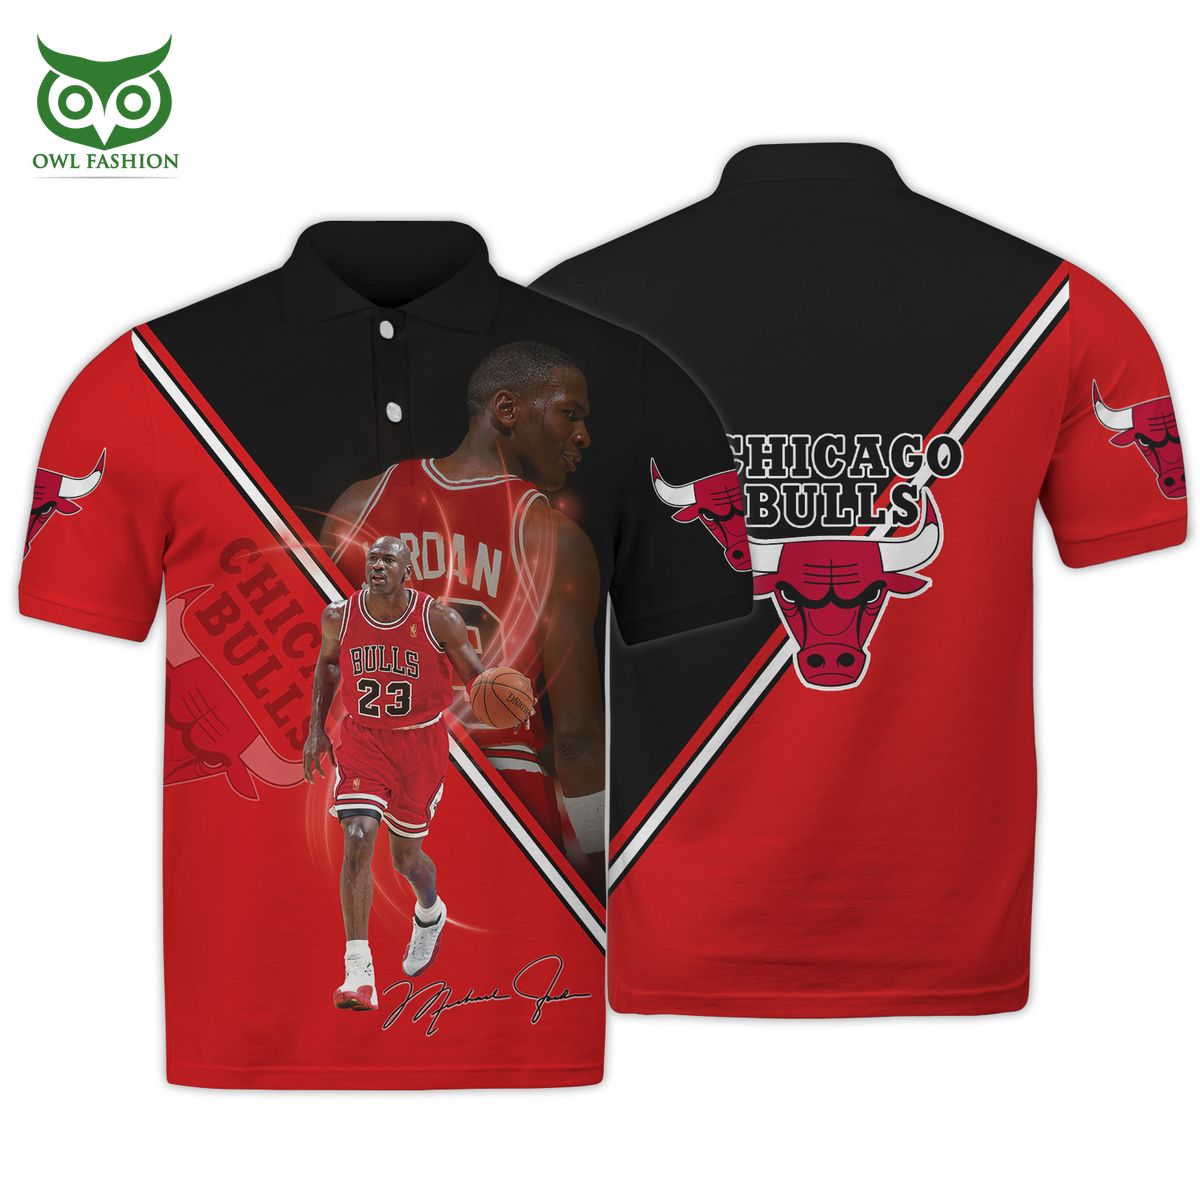 NBA Legend Michael Jordan 23 Chicago Bulls 3D TShirt Hoodie - Owl